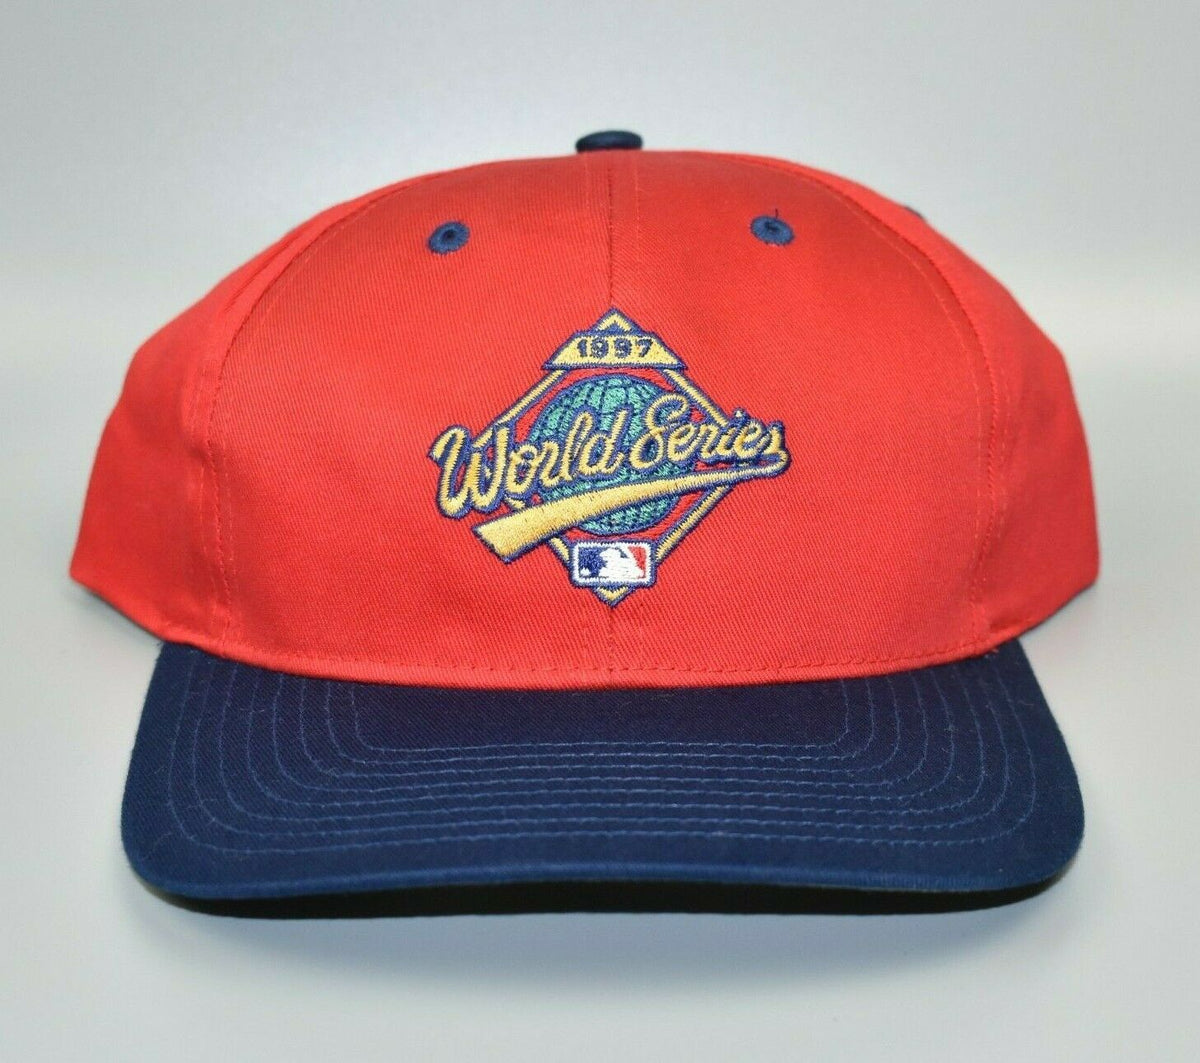 Vintage 90's Atlanta Braves Snapback Hat MLB Baseball Cap Annco